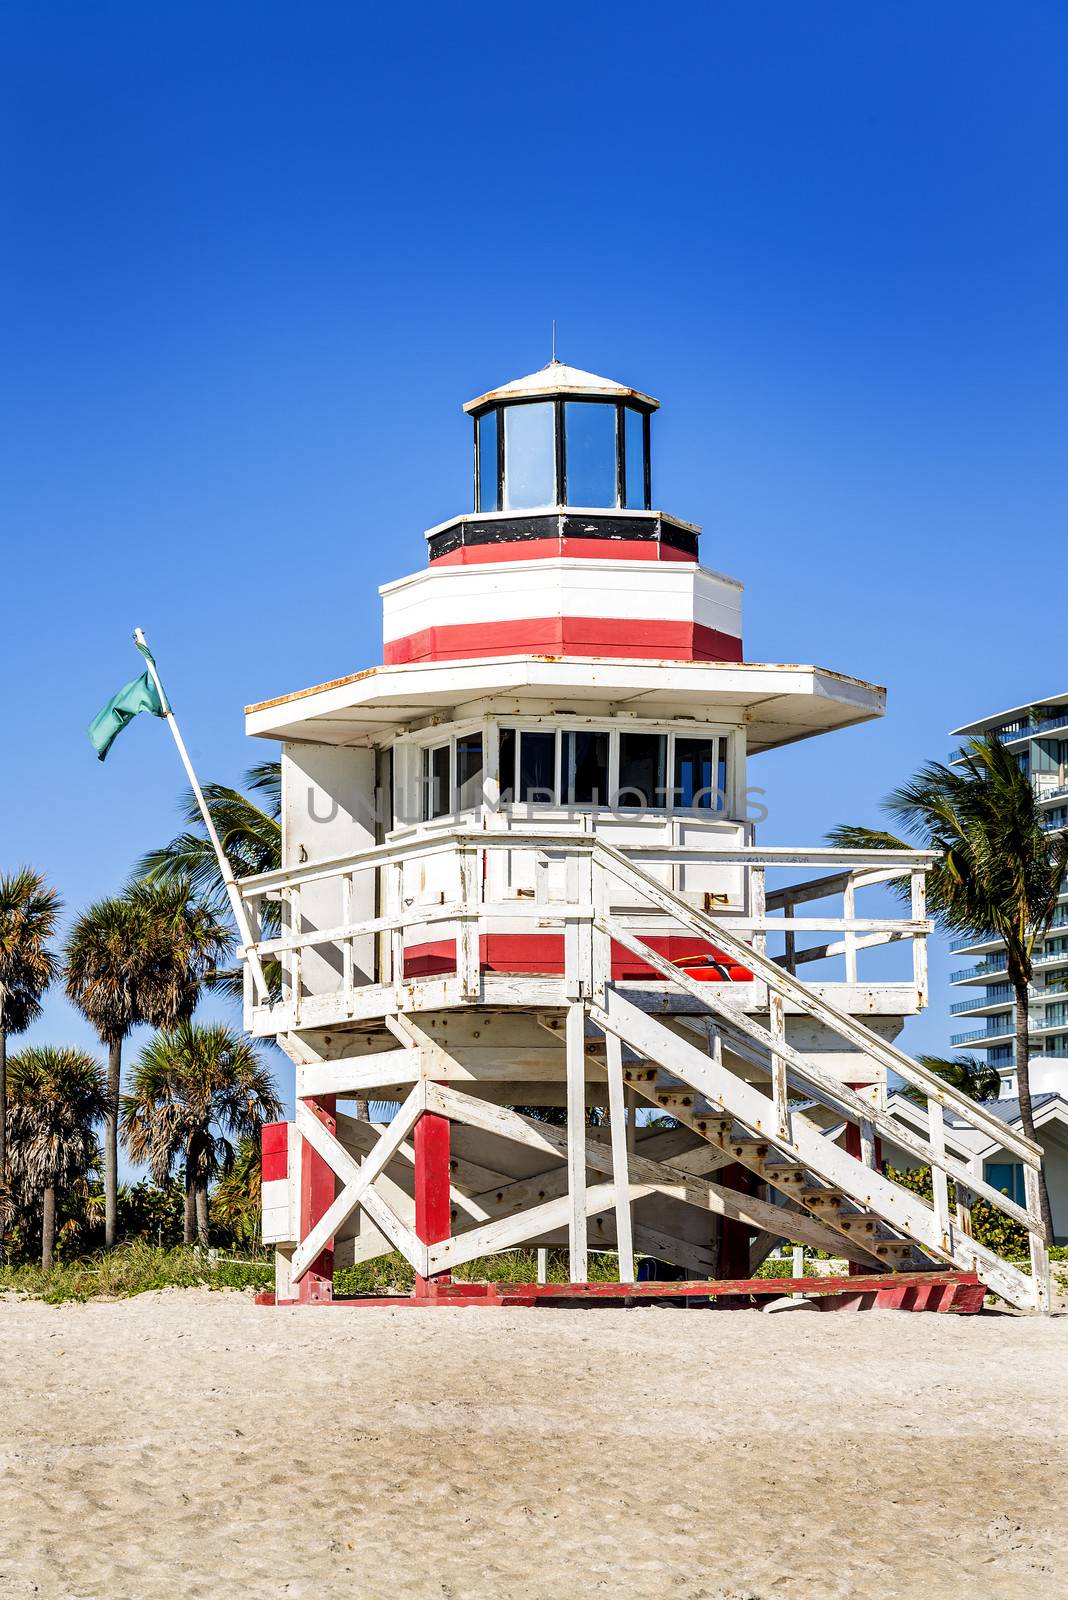 Lifeguard Tower, Miami Beach, Florida by ventdusud